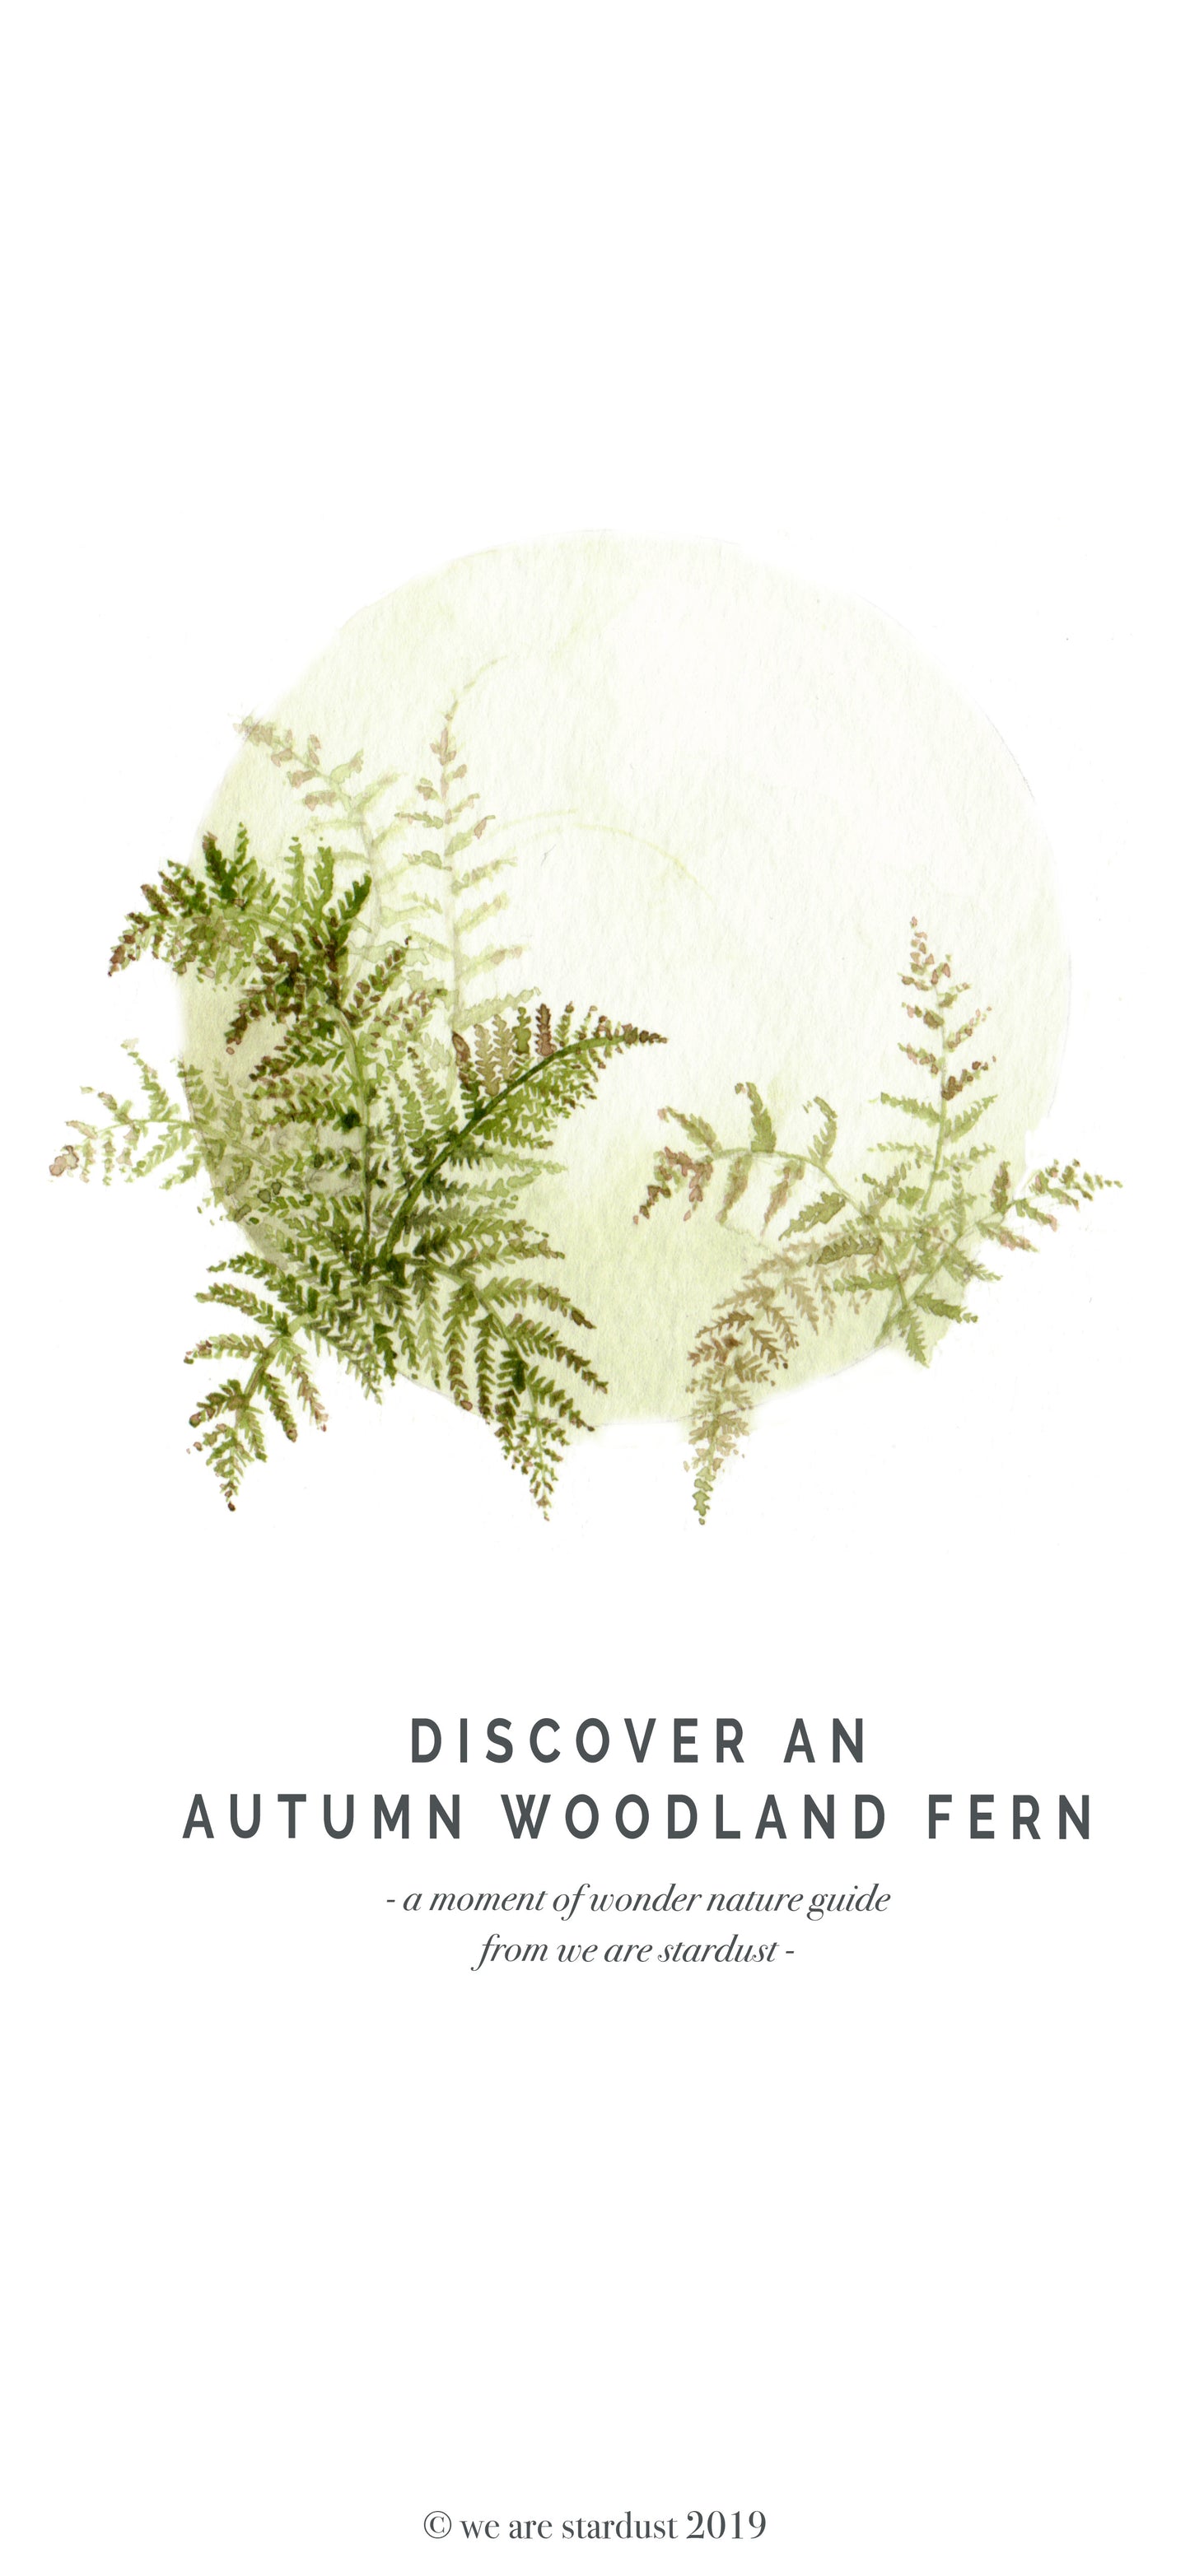 Autumn woodland fern nature guide